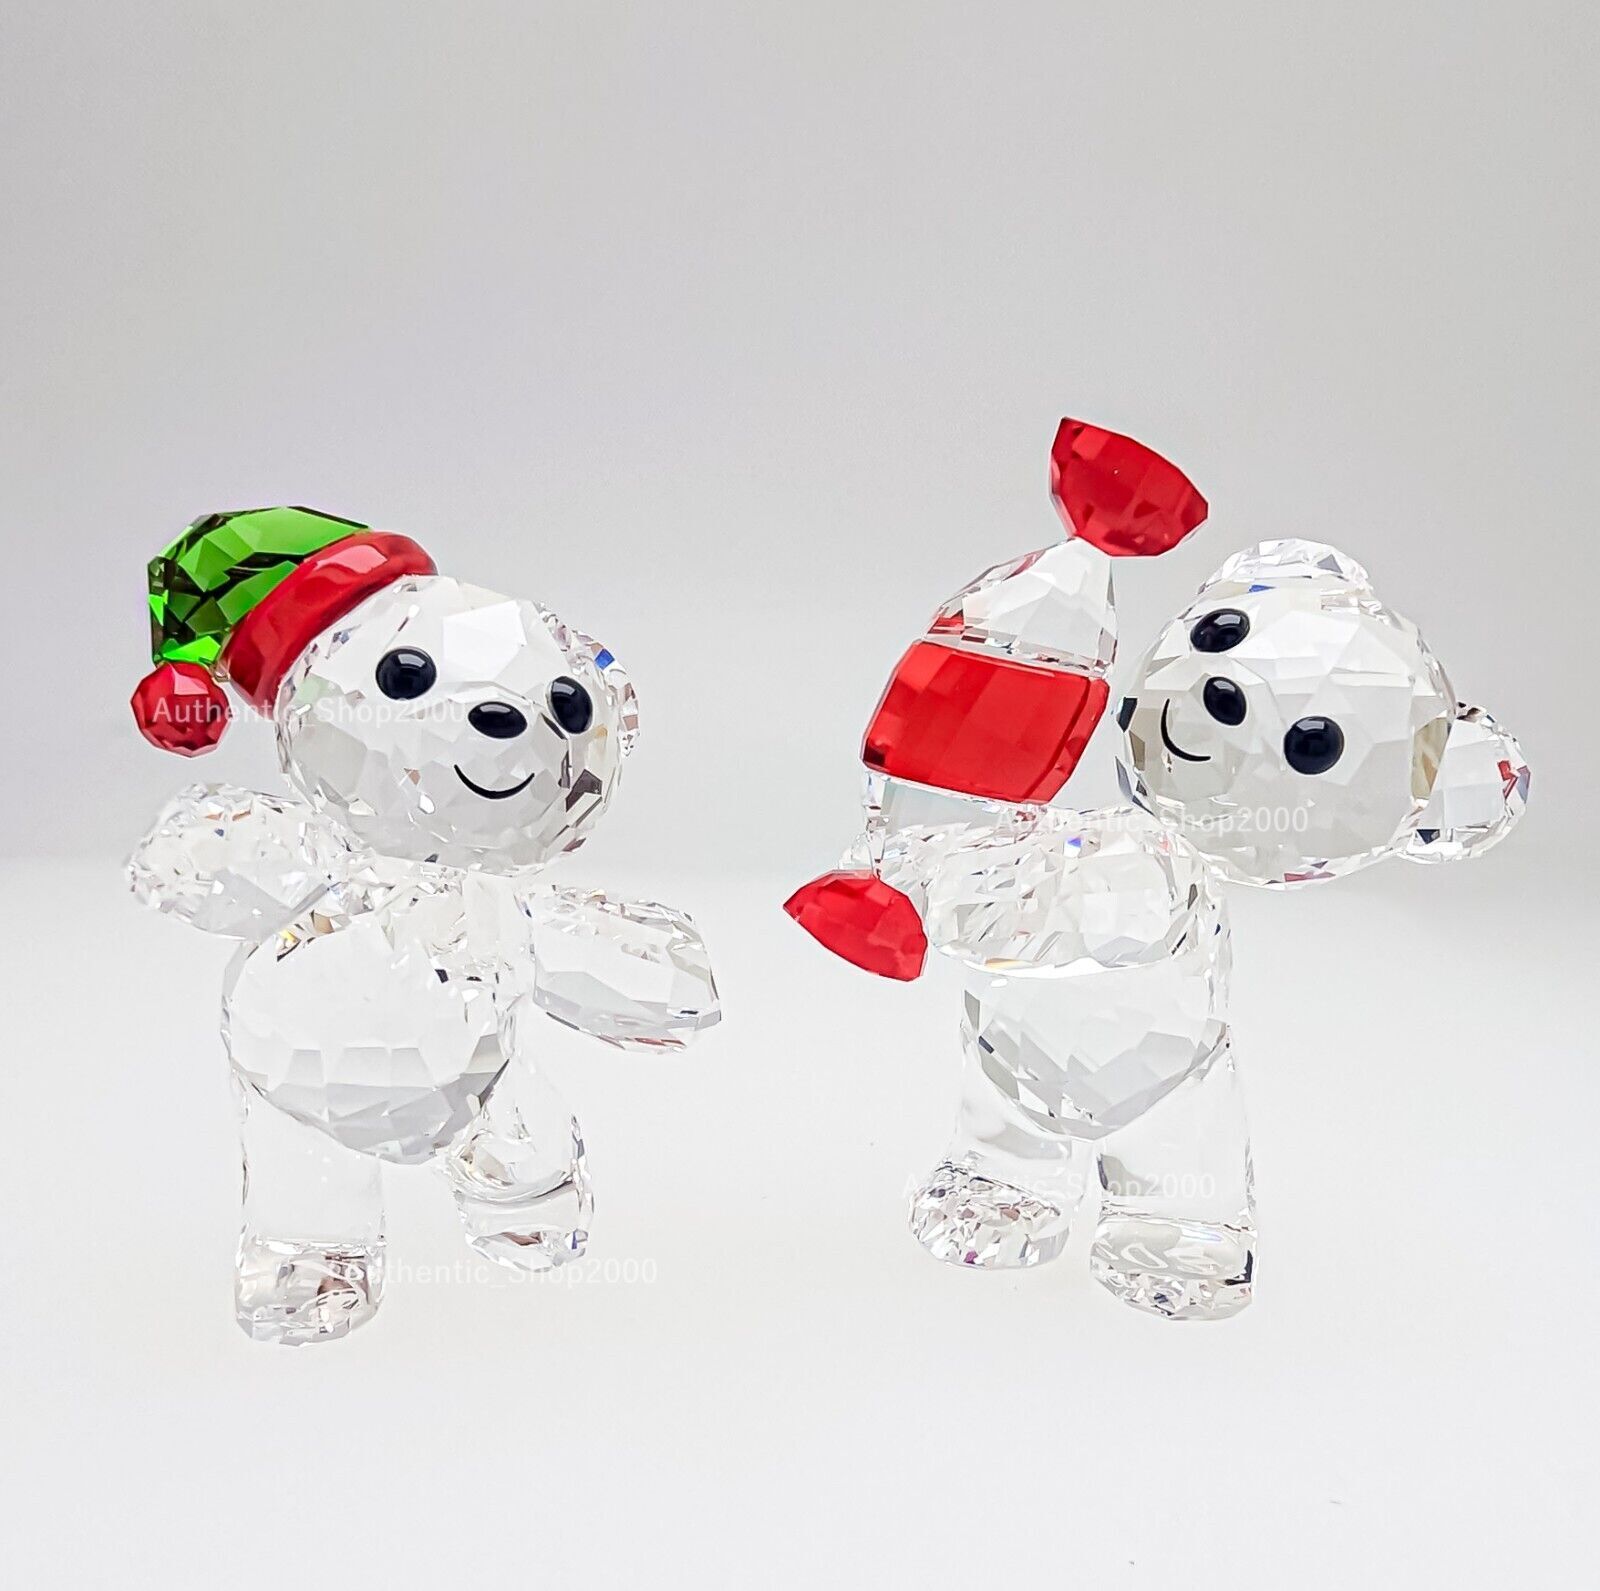 Swarovski Crystal Kris Bear Holiday Annual Edition Figurine 2023 5652642